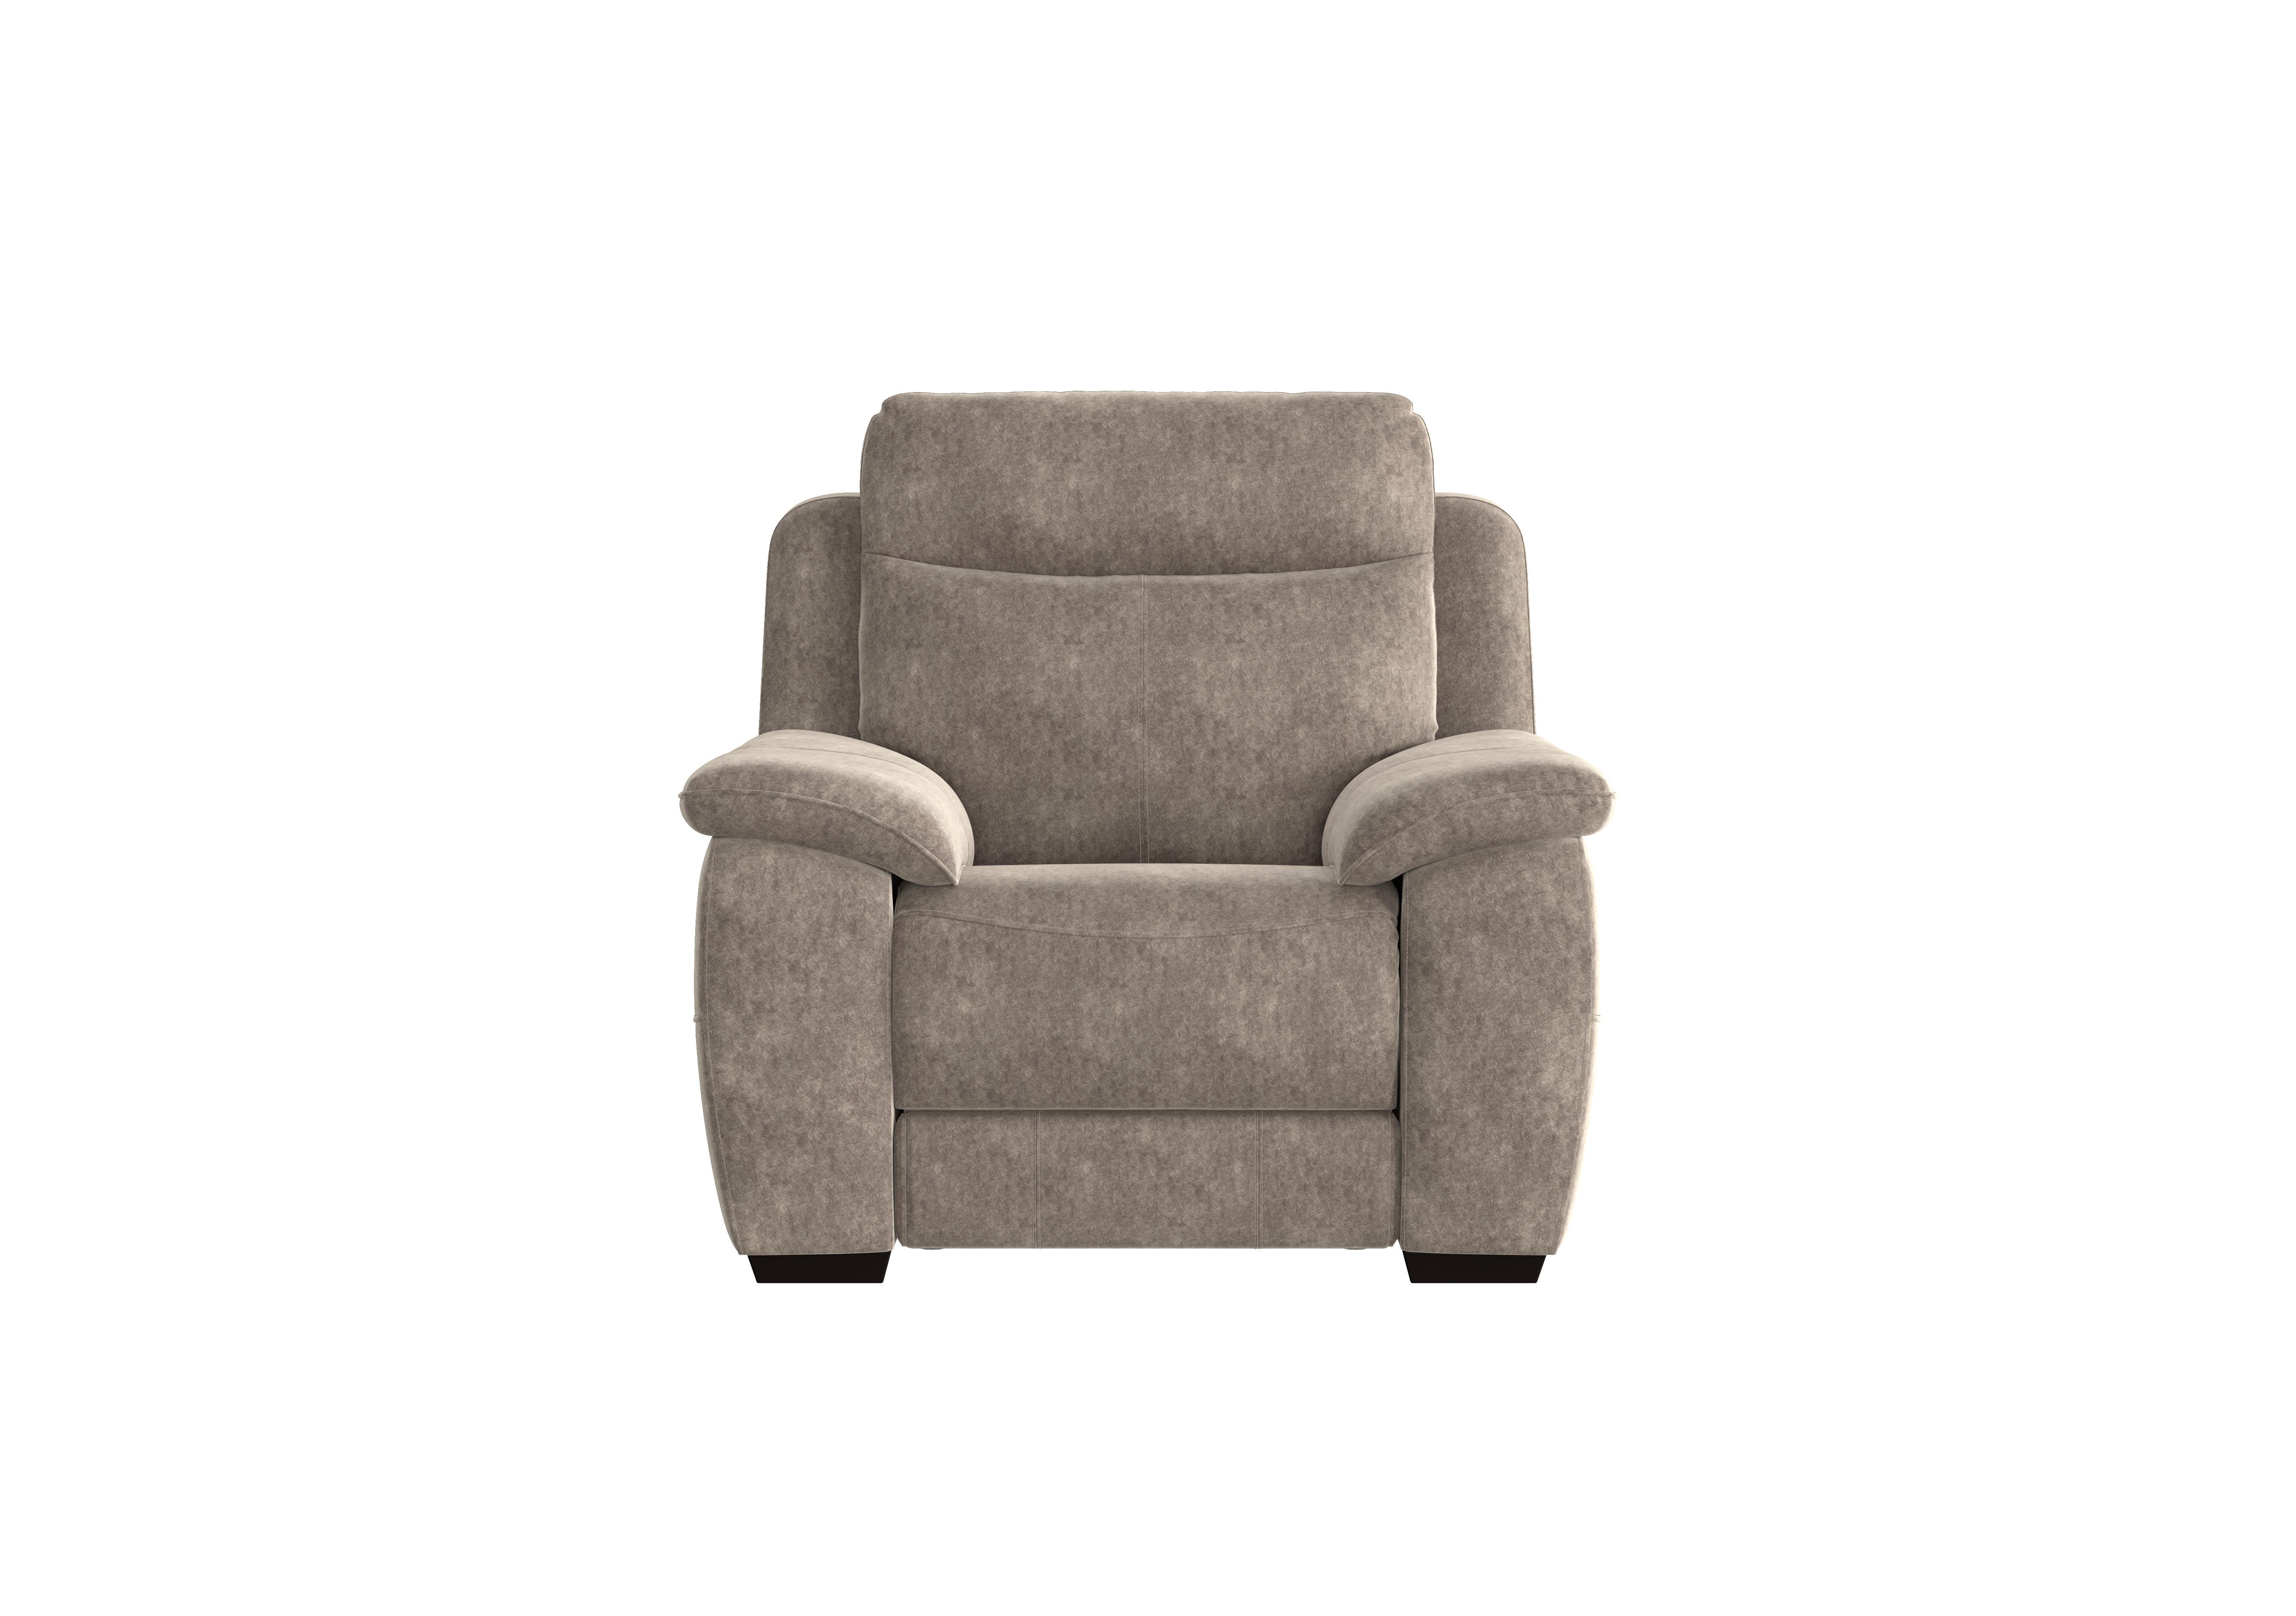 Starlight Express Fabric Armchair in Bfa-Bnn-R29 Fv1 Mink on Furniture Village